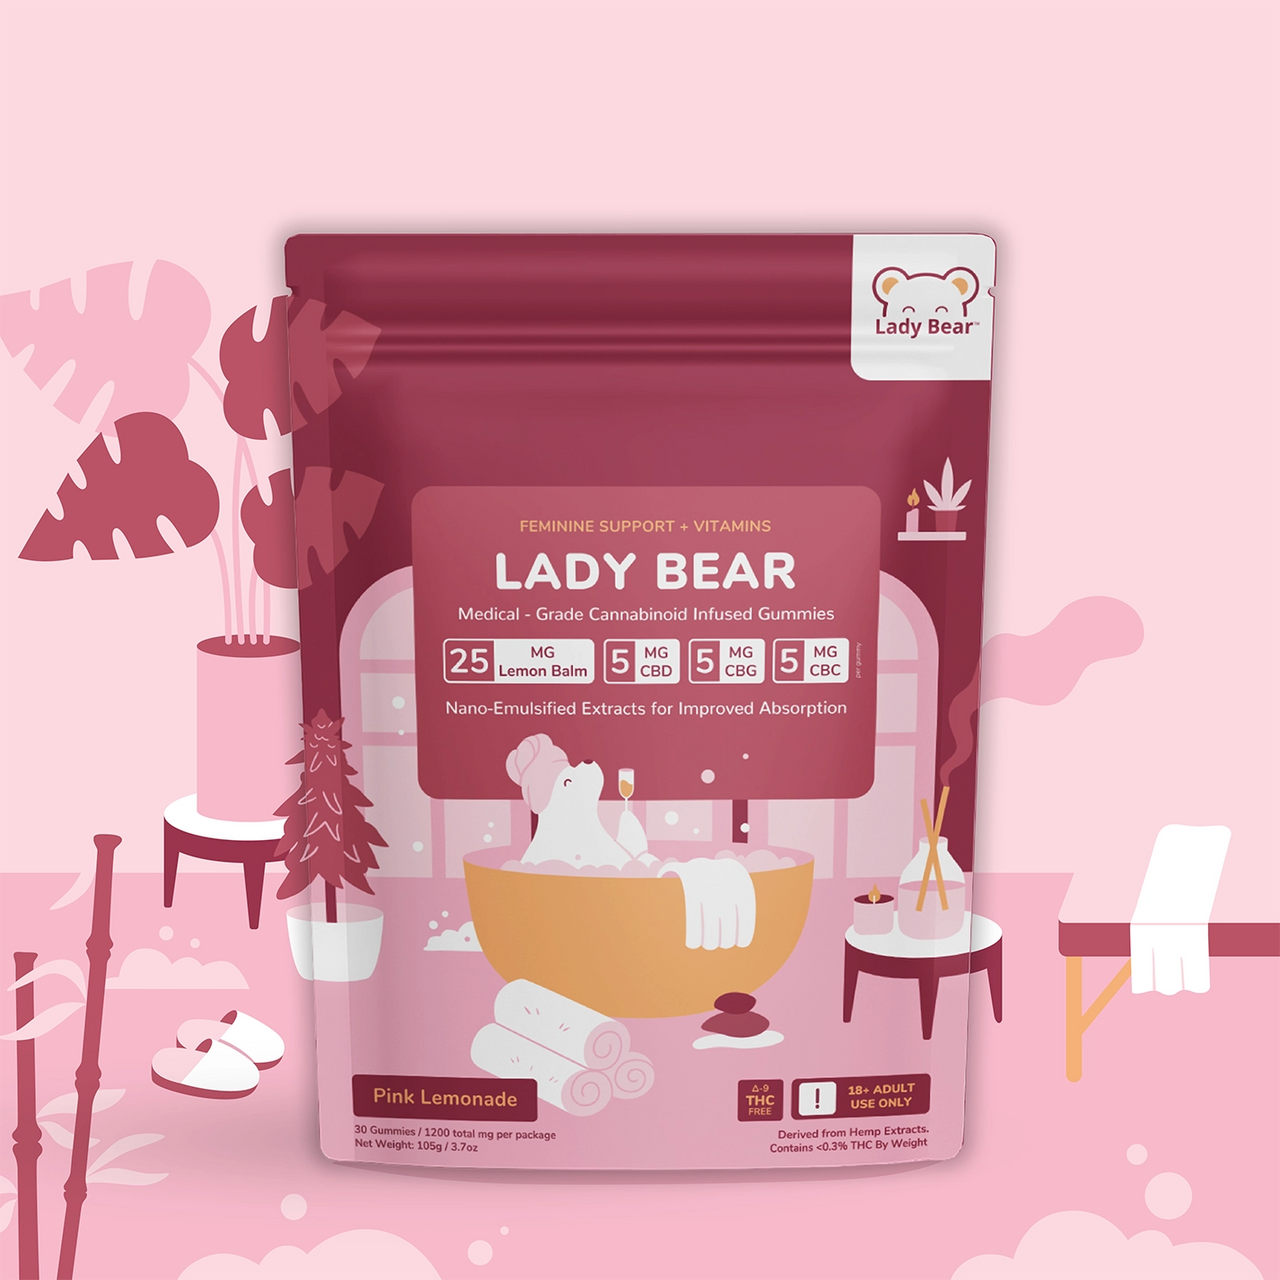 Lady Bear (CBD/CBG/CBC/Vitamins) - Feminine Support